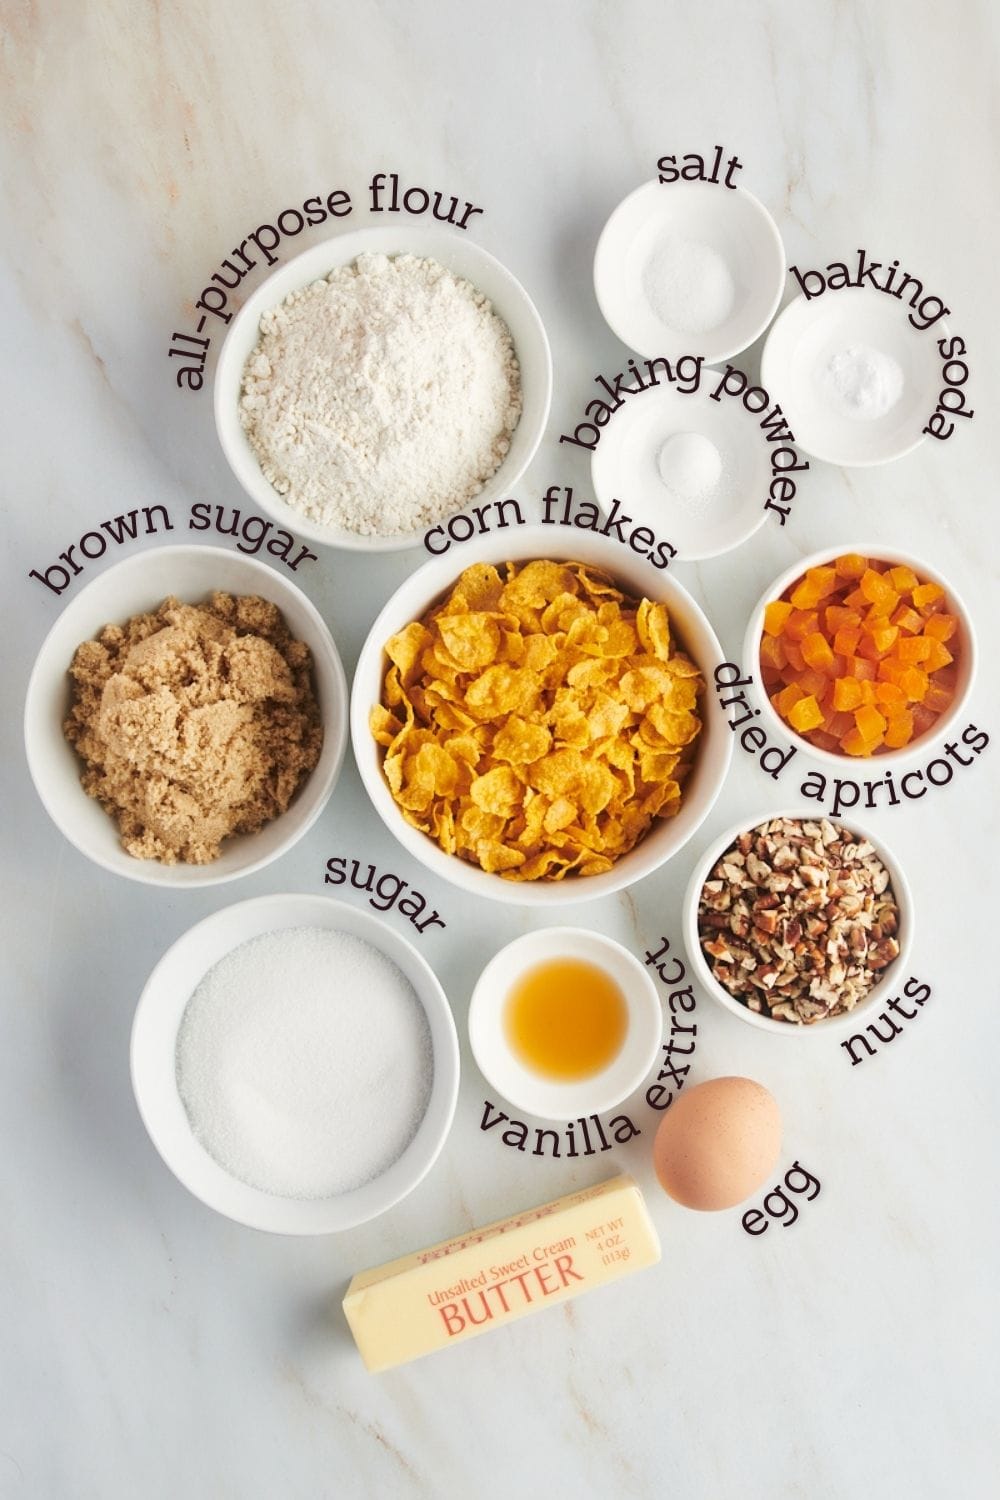 Overhead view of ingredients for cornflake cookies